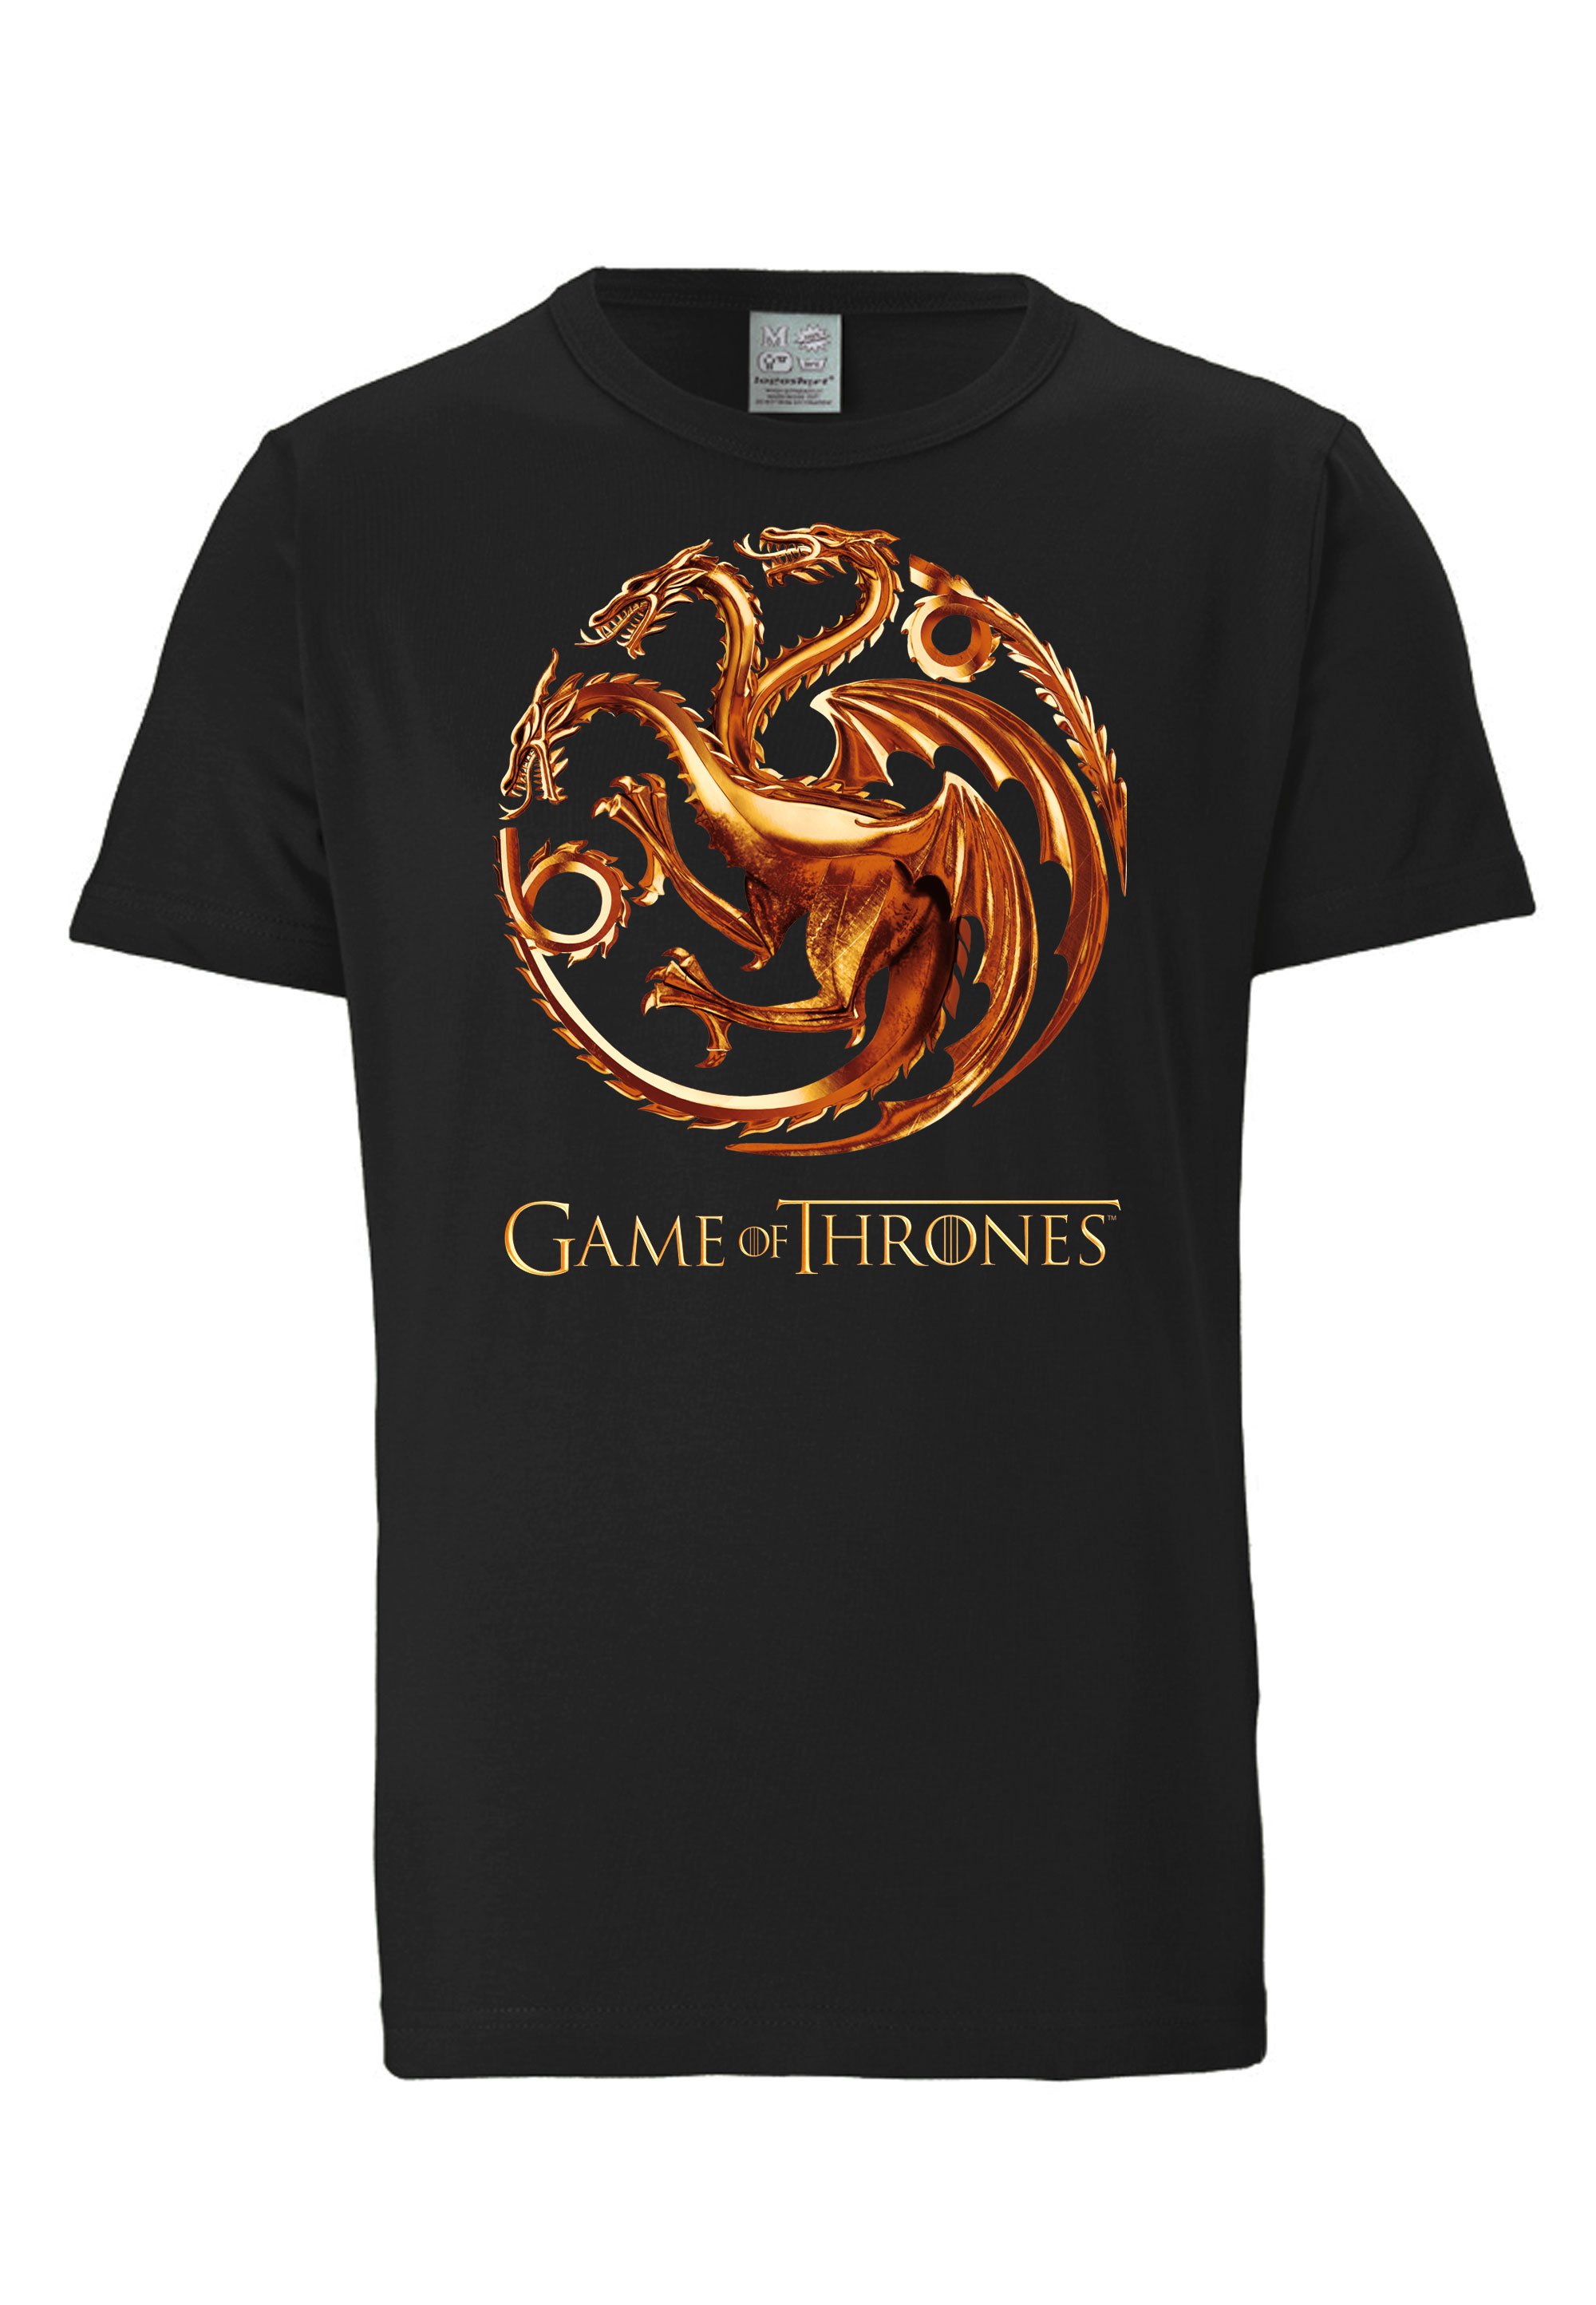 Футболка Logoshirt Game Of Thrones Targaryen, черный daenerys targaryen game of thrones 651549 4xs белый